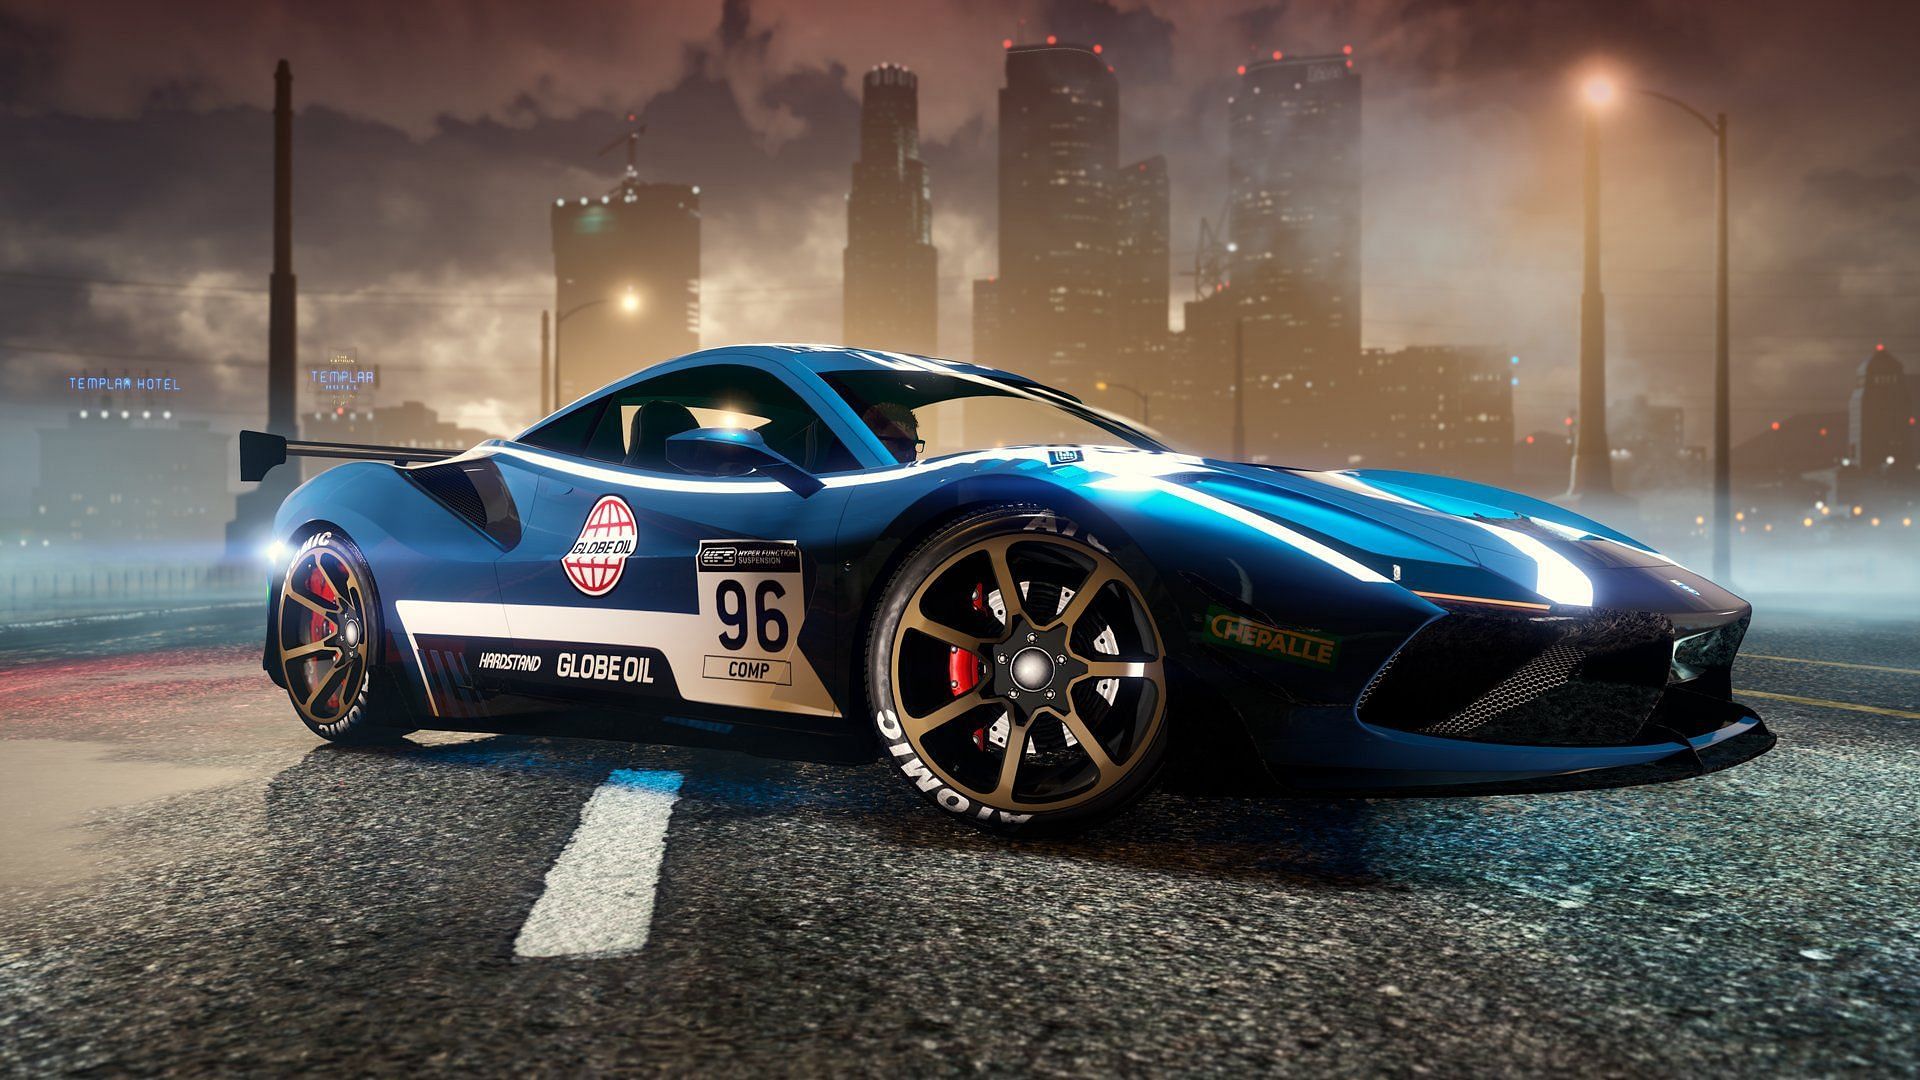 Car customization is a popular activity among GTA Online players (Image via Rockstar Games)